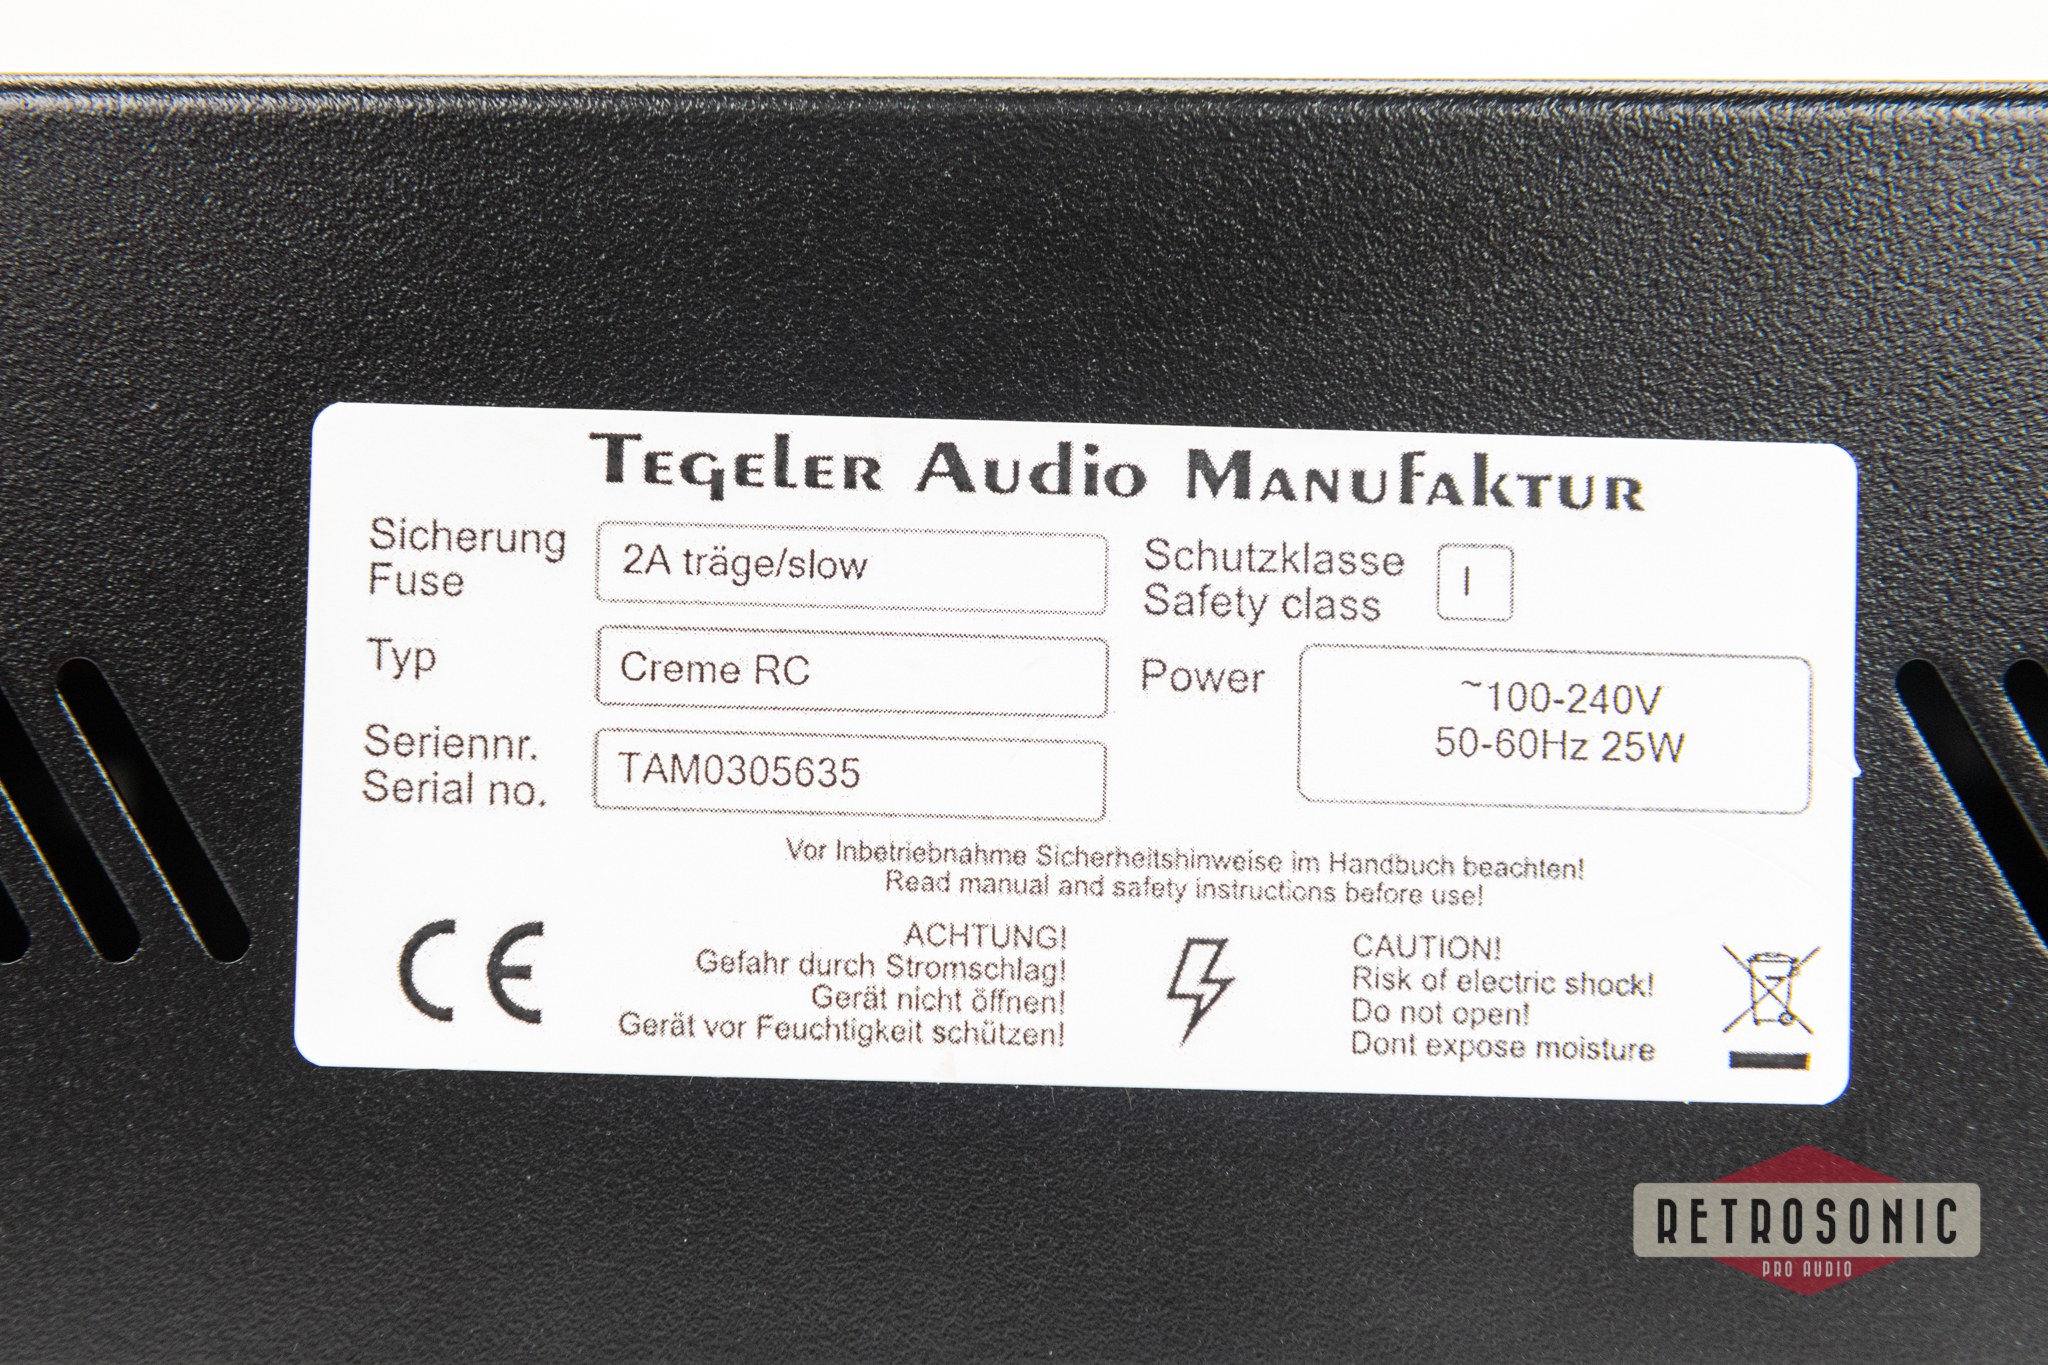 Tegeler Audio Creme RC Bus Compressor and Mastering Equalizer